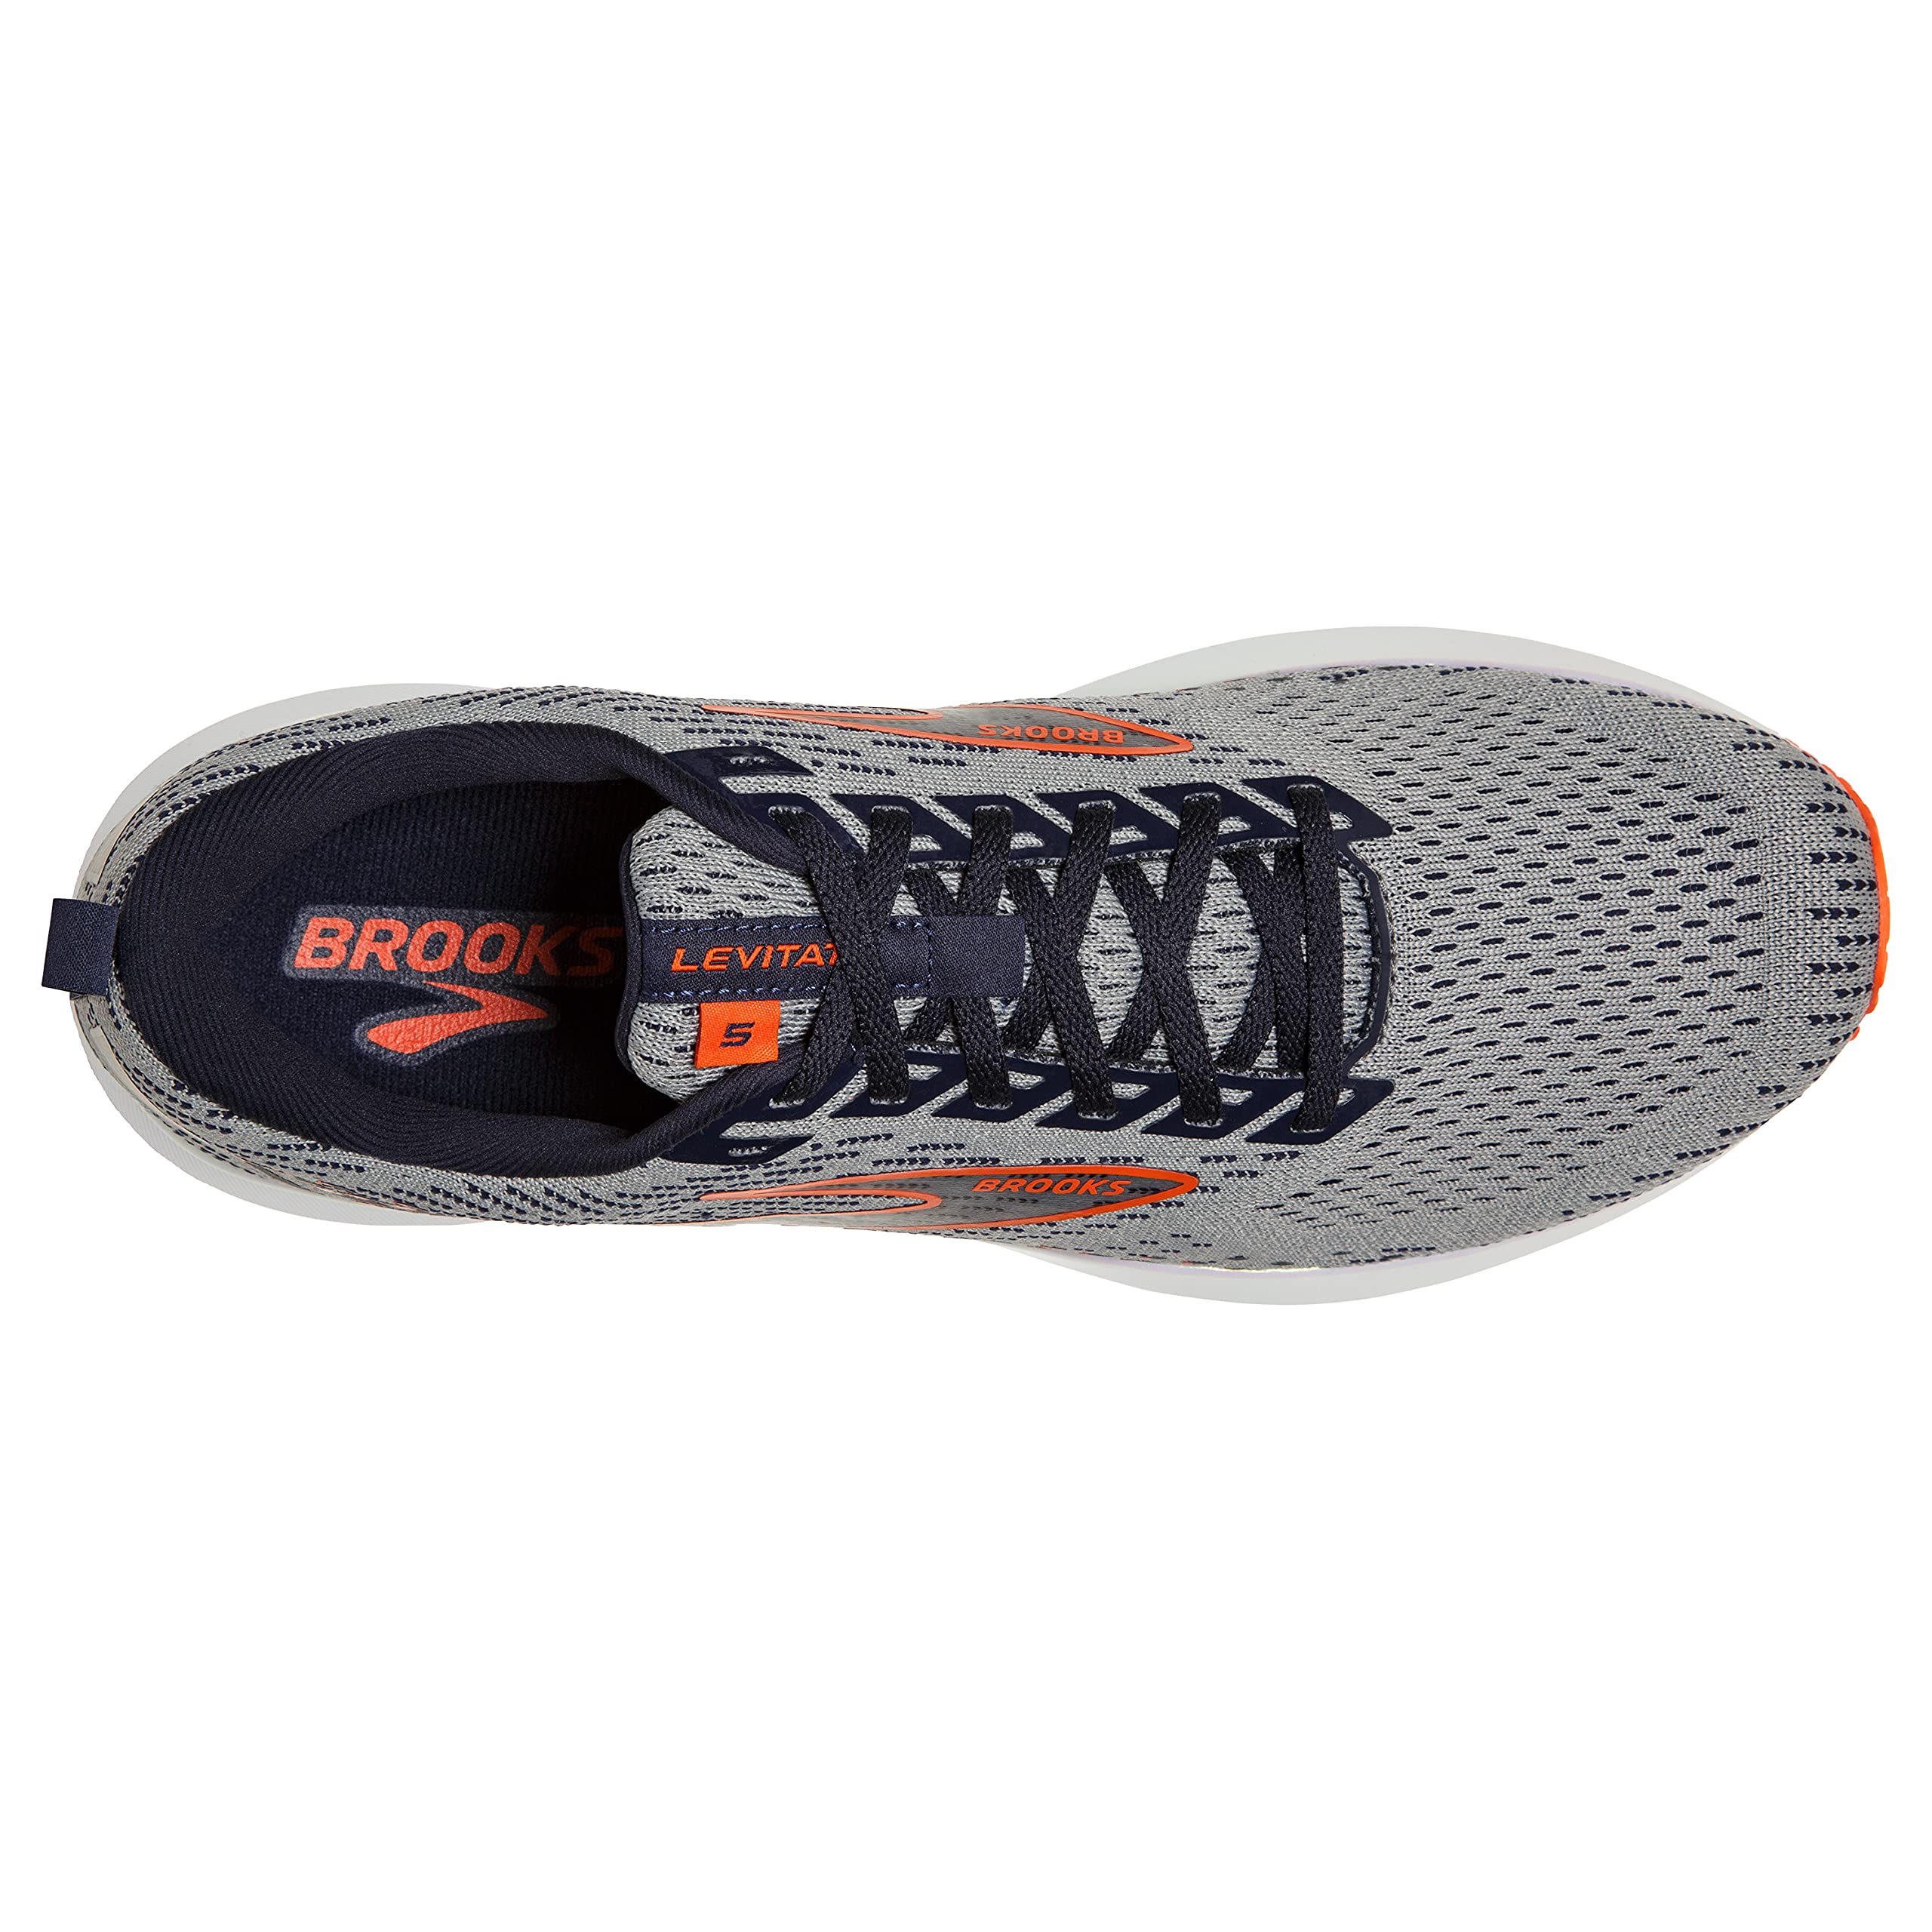 Brooks Men's Levitate 5 Neutral Running Shoe - Grey/Peacoat/Flame - 11.5 Medium